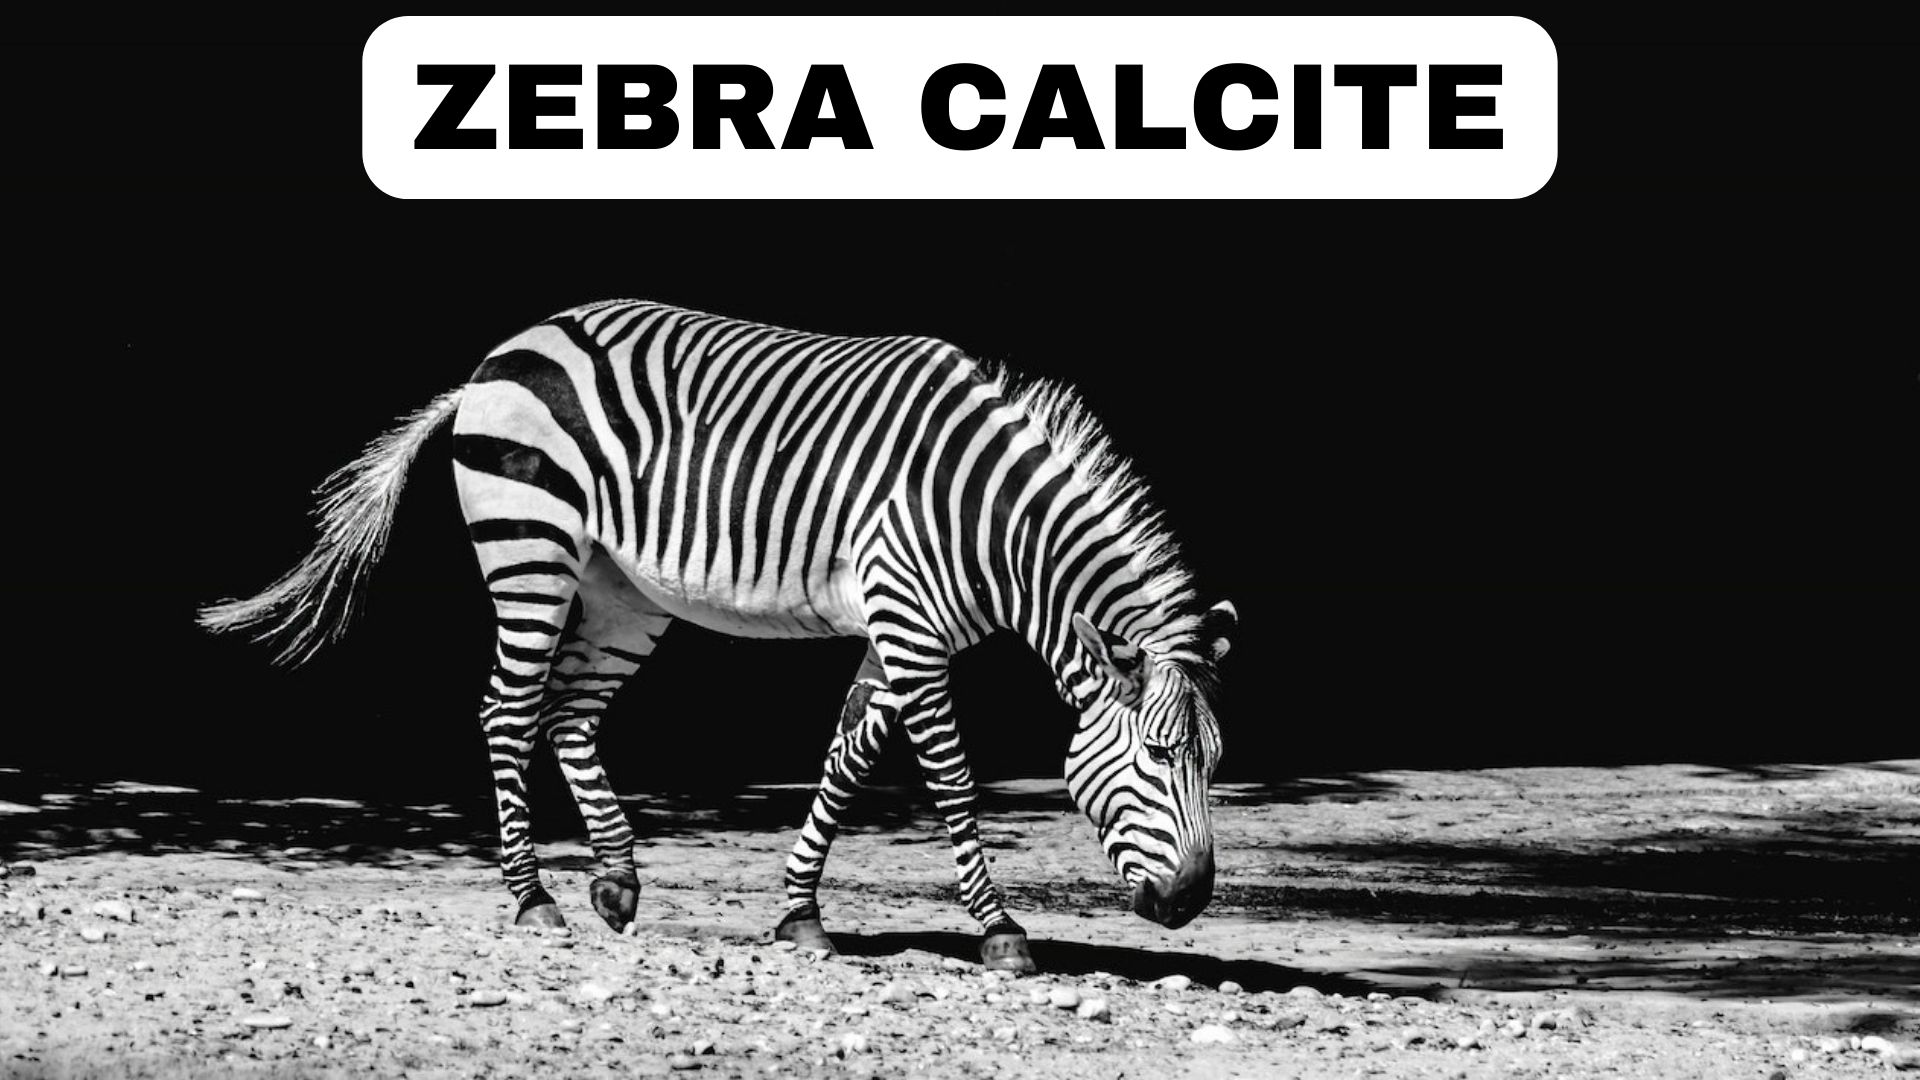 Zebra Calcite - Doubt And Uncertainty